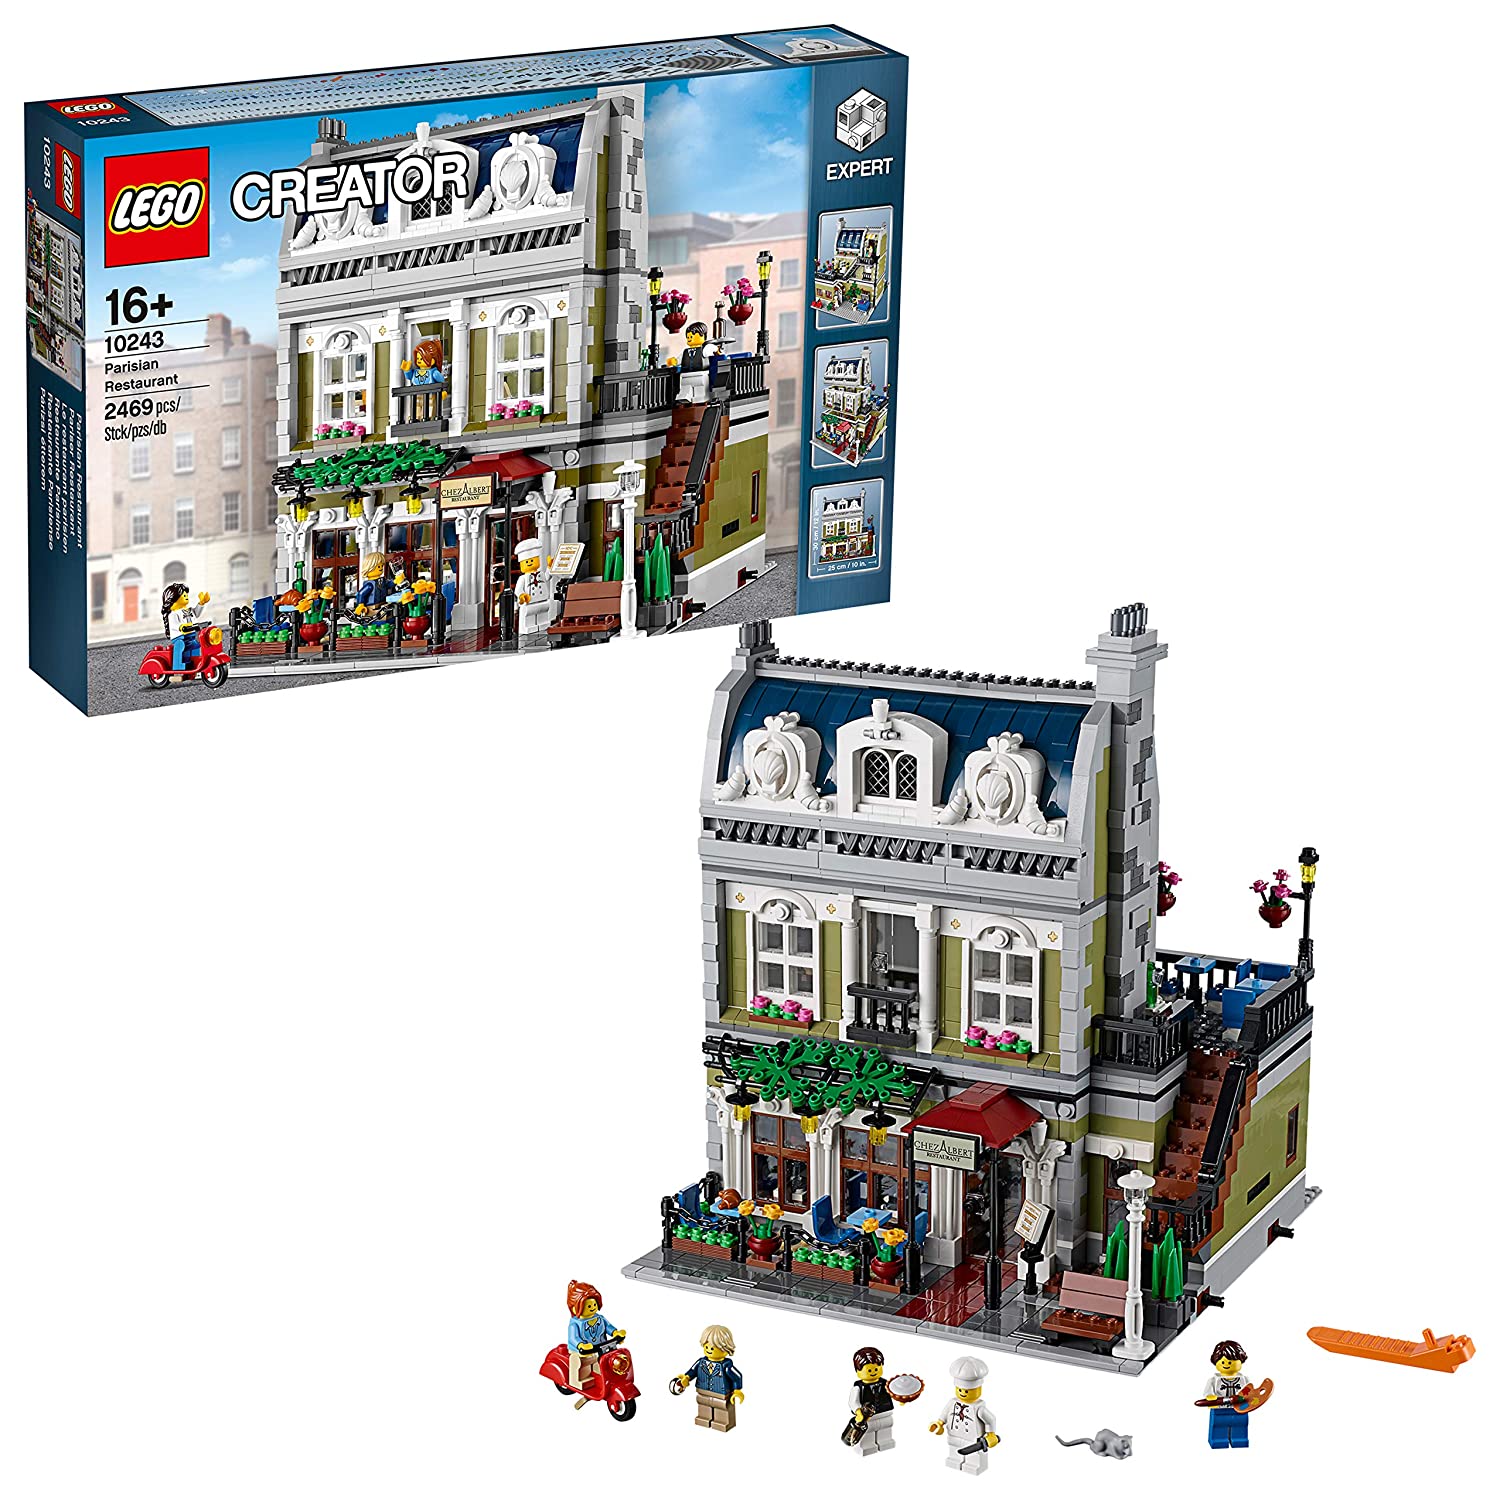 9 Best LEGO Modular Buildings Set 2022 - Buying Guide 9